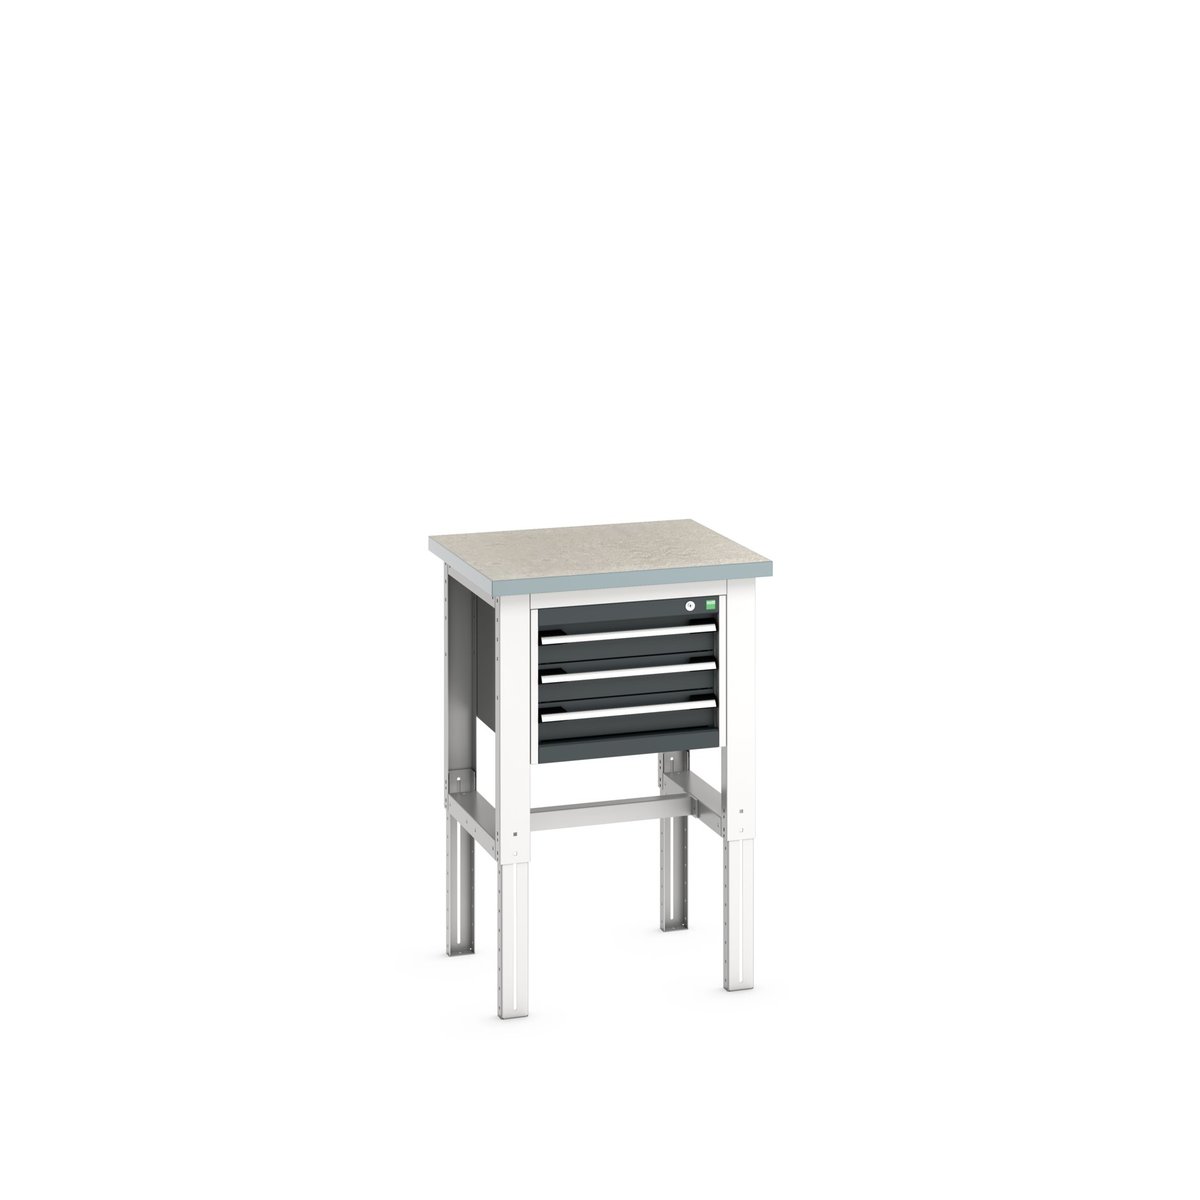 41003535. - cubio framework bench (lino)